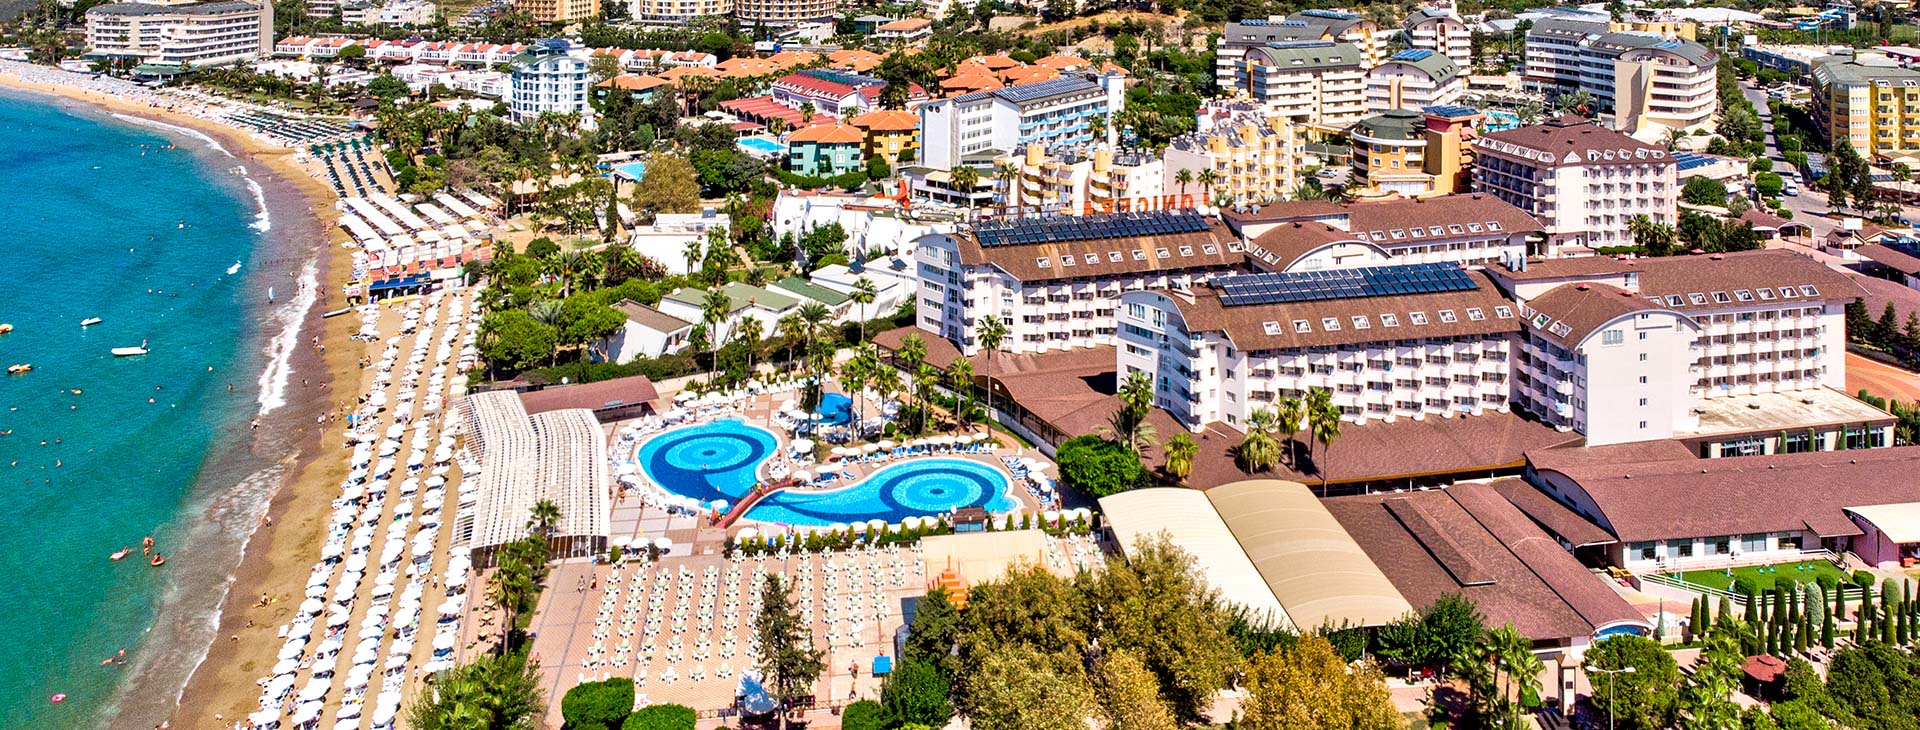 Lonicera Resort and Spa Obrázek15